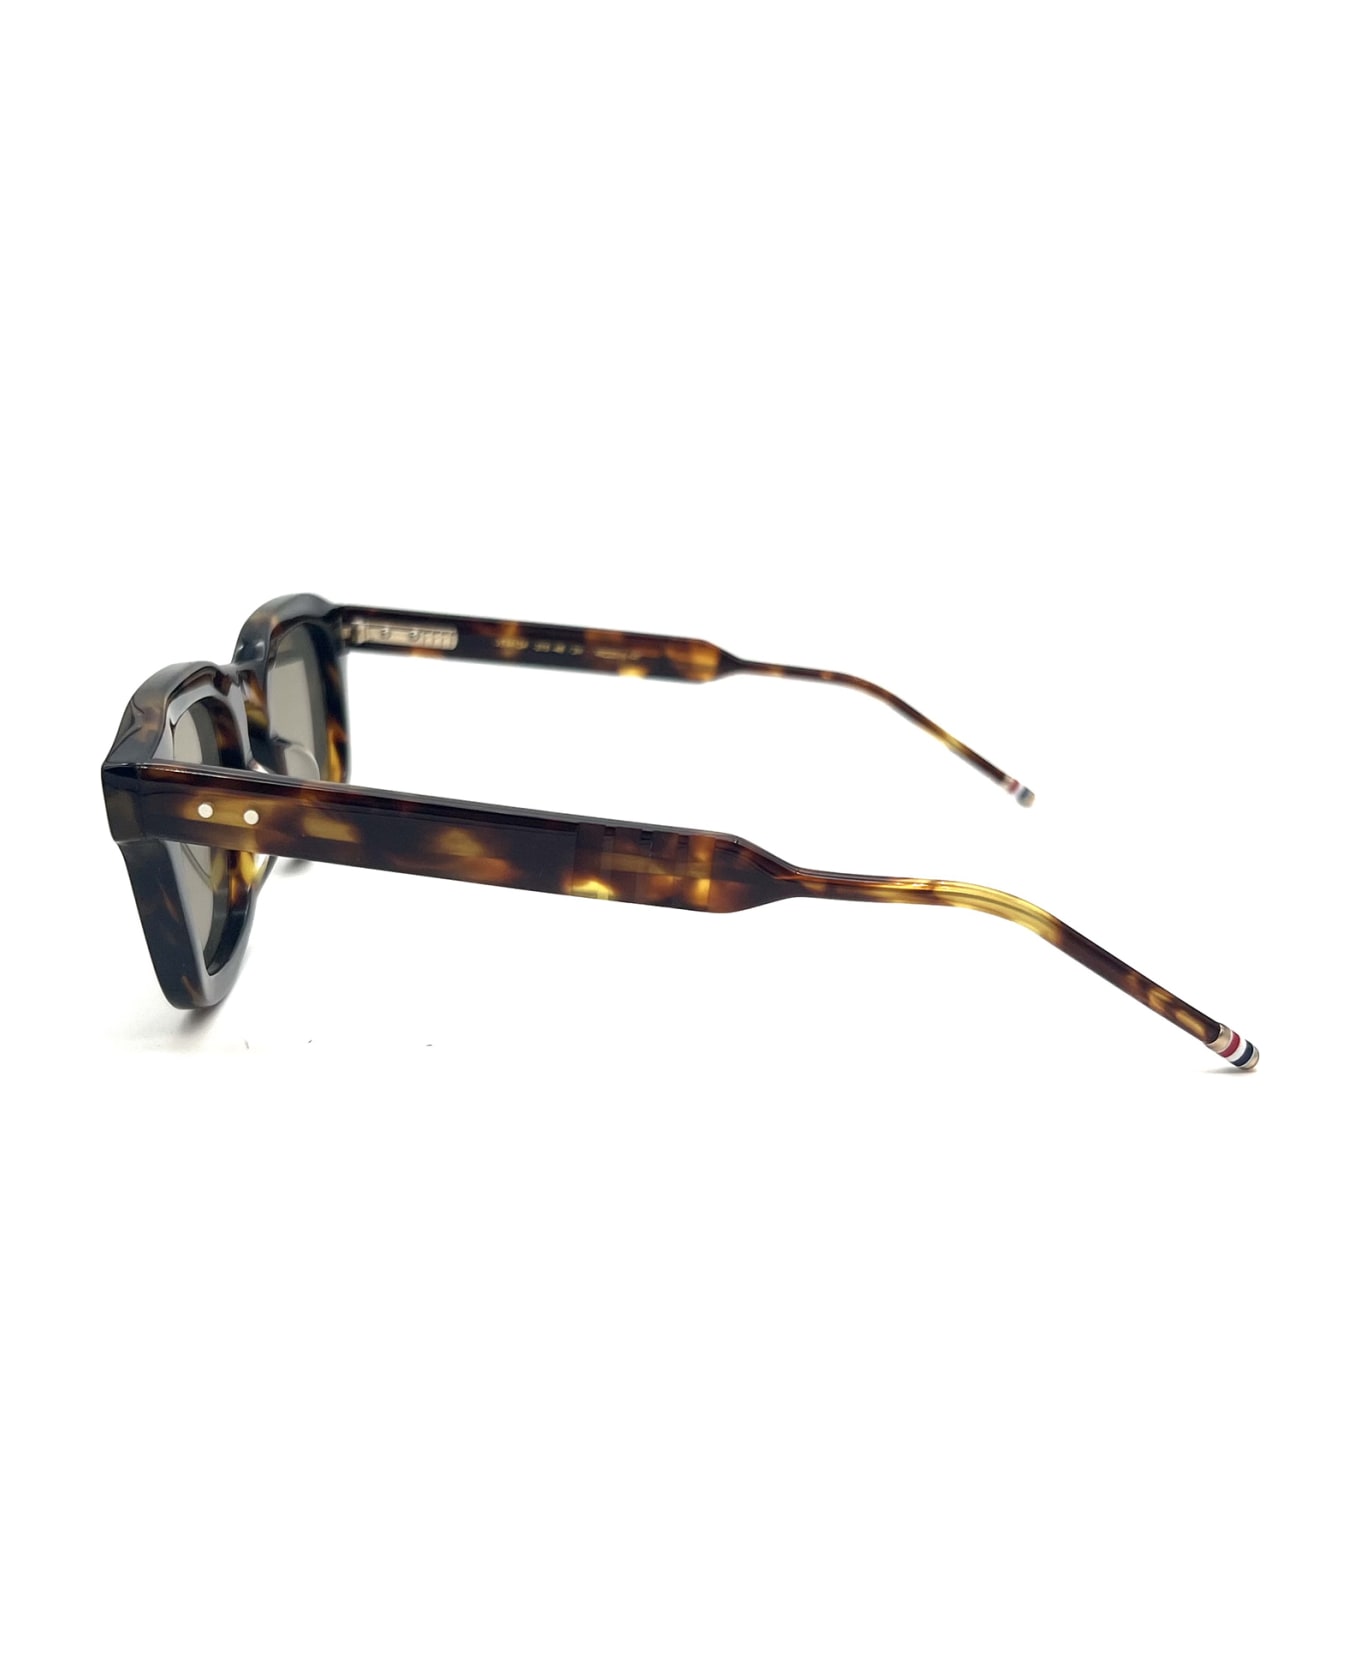 Thom Browne Square Frame Sunglasses - Med Brown サングラス